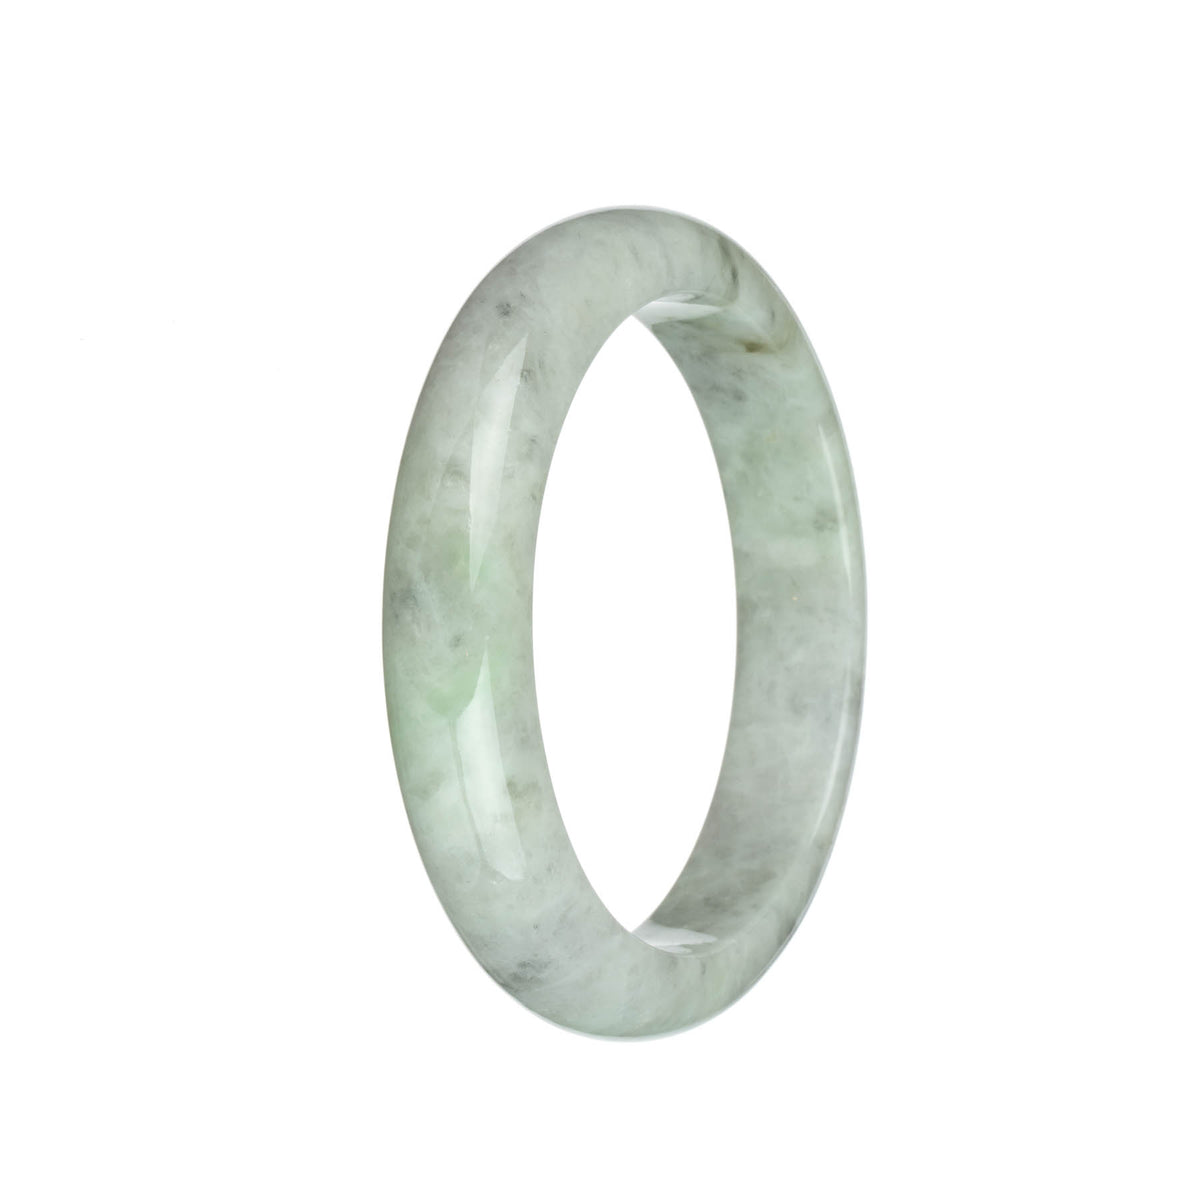 Genuine Type A Light Green and Light Grey with Grey Patterns Jadeite Bangle Bracelet - 62mm Half Moon